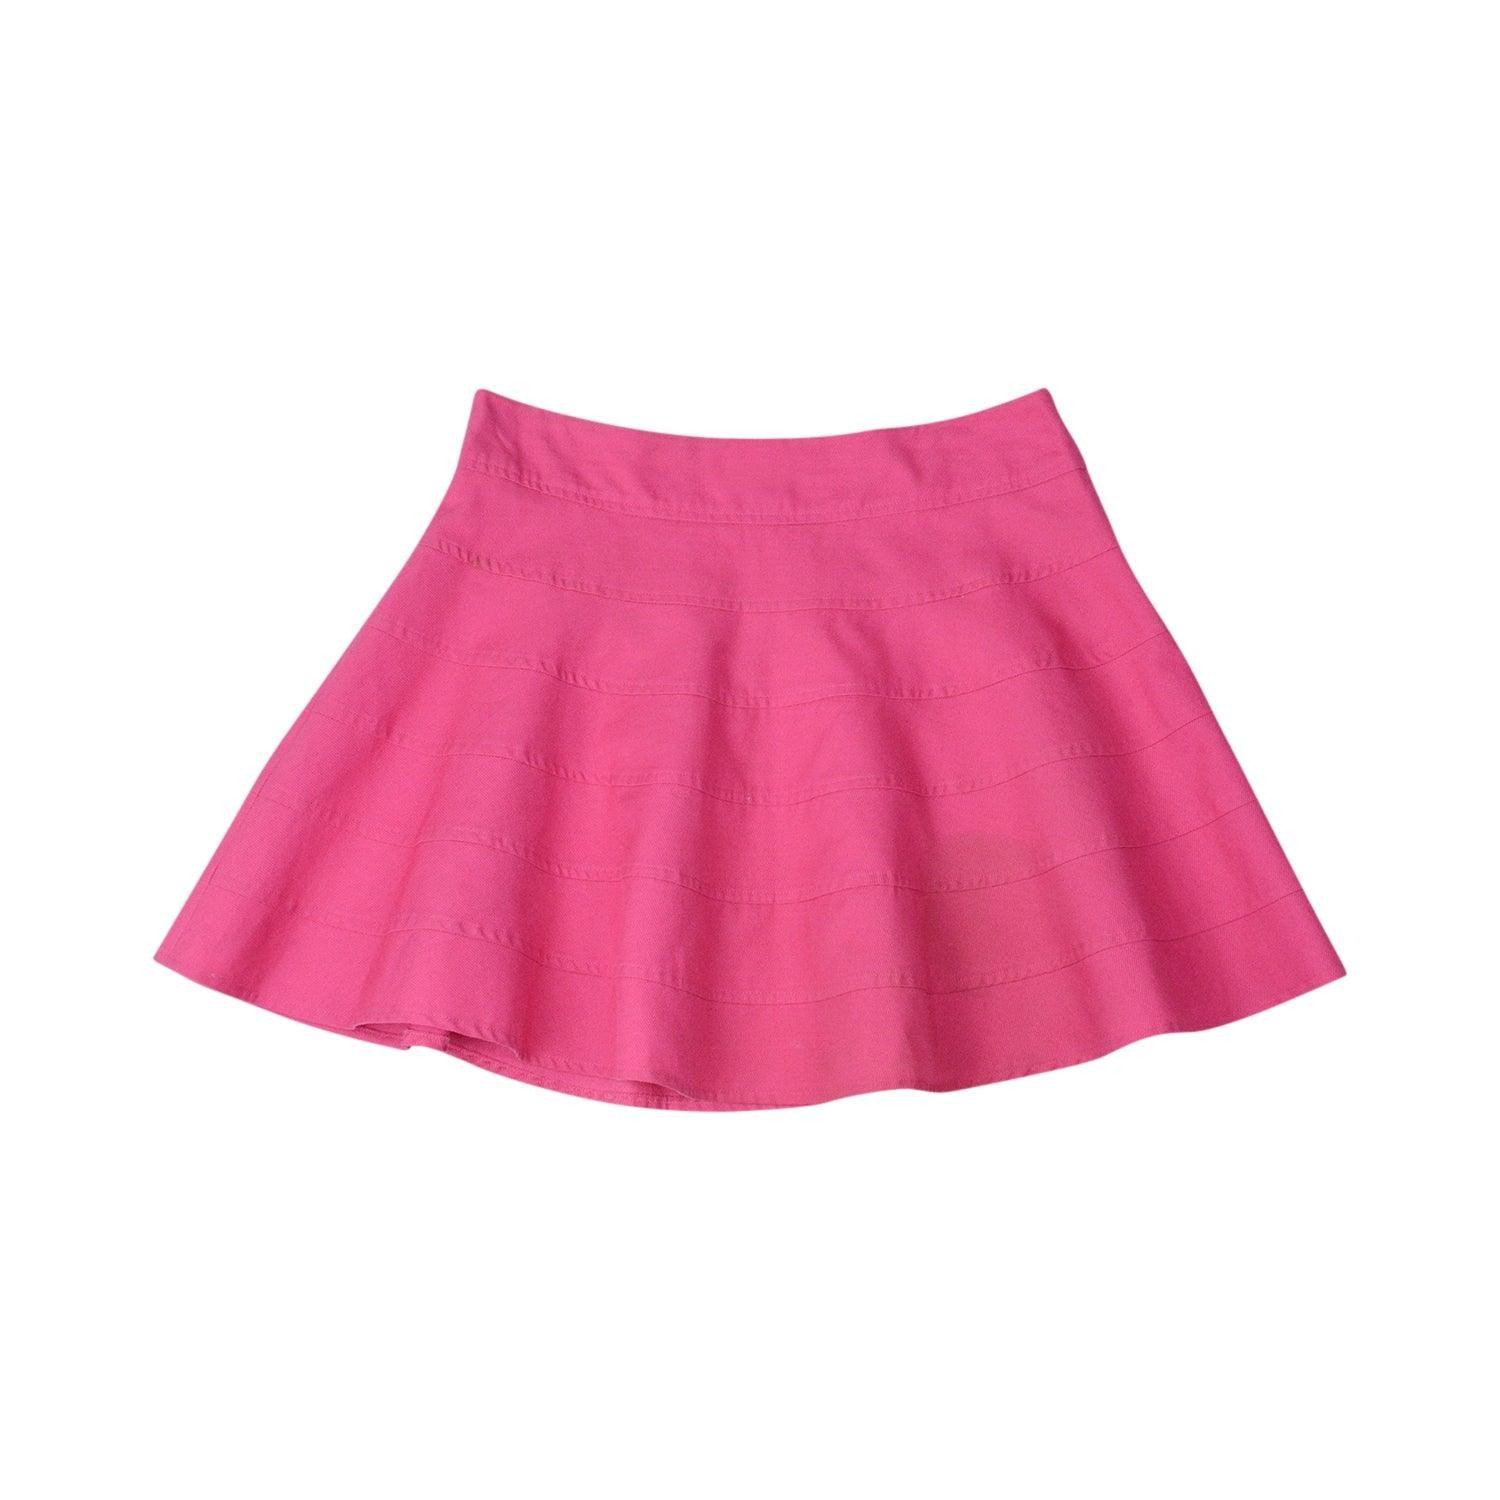 Kira Plastinina Mini Skirt - Women's M - Fashionably Yours